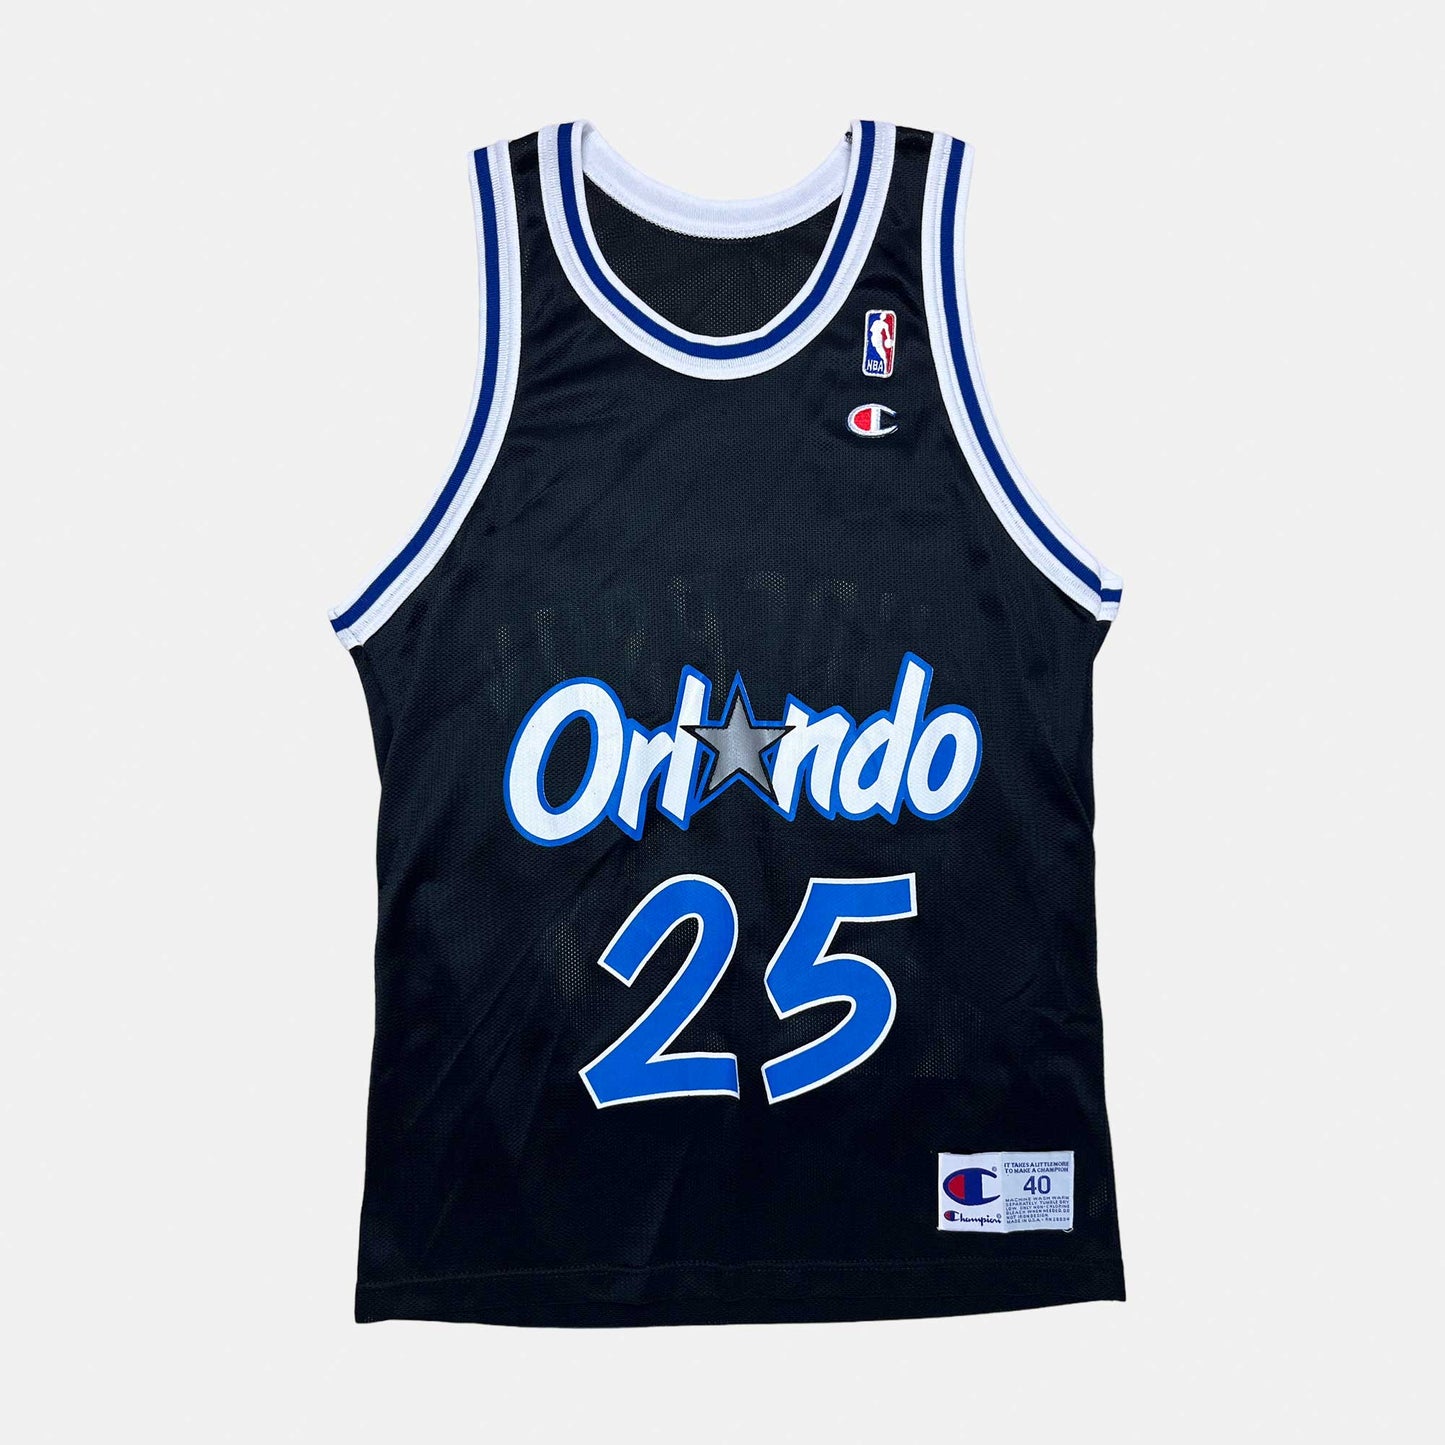 Orlando Magic - Nick Anderson - Größe M / US40 - Champion - NBA Trikot